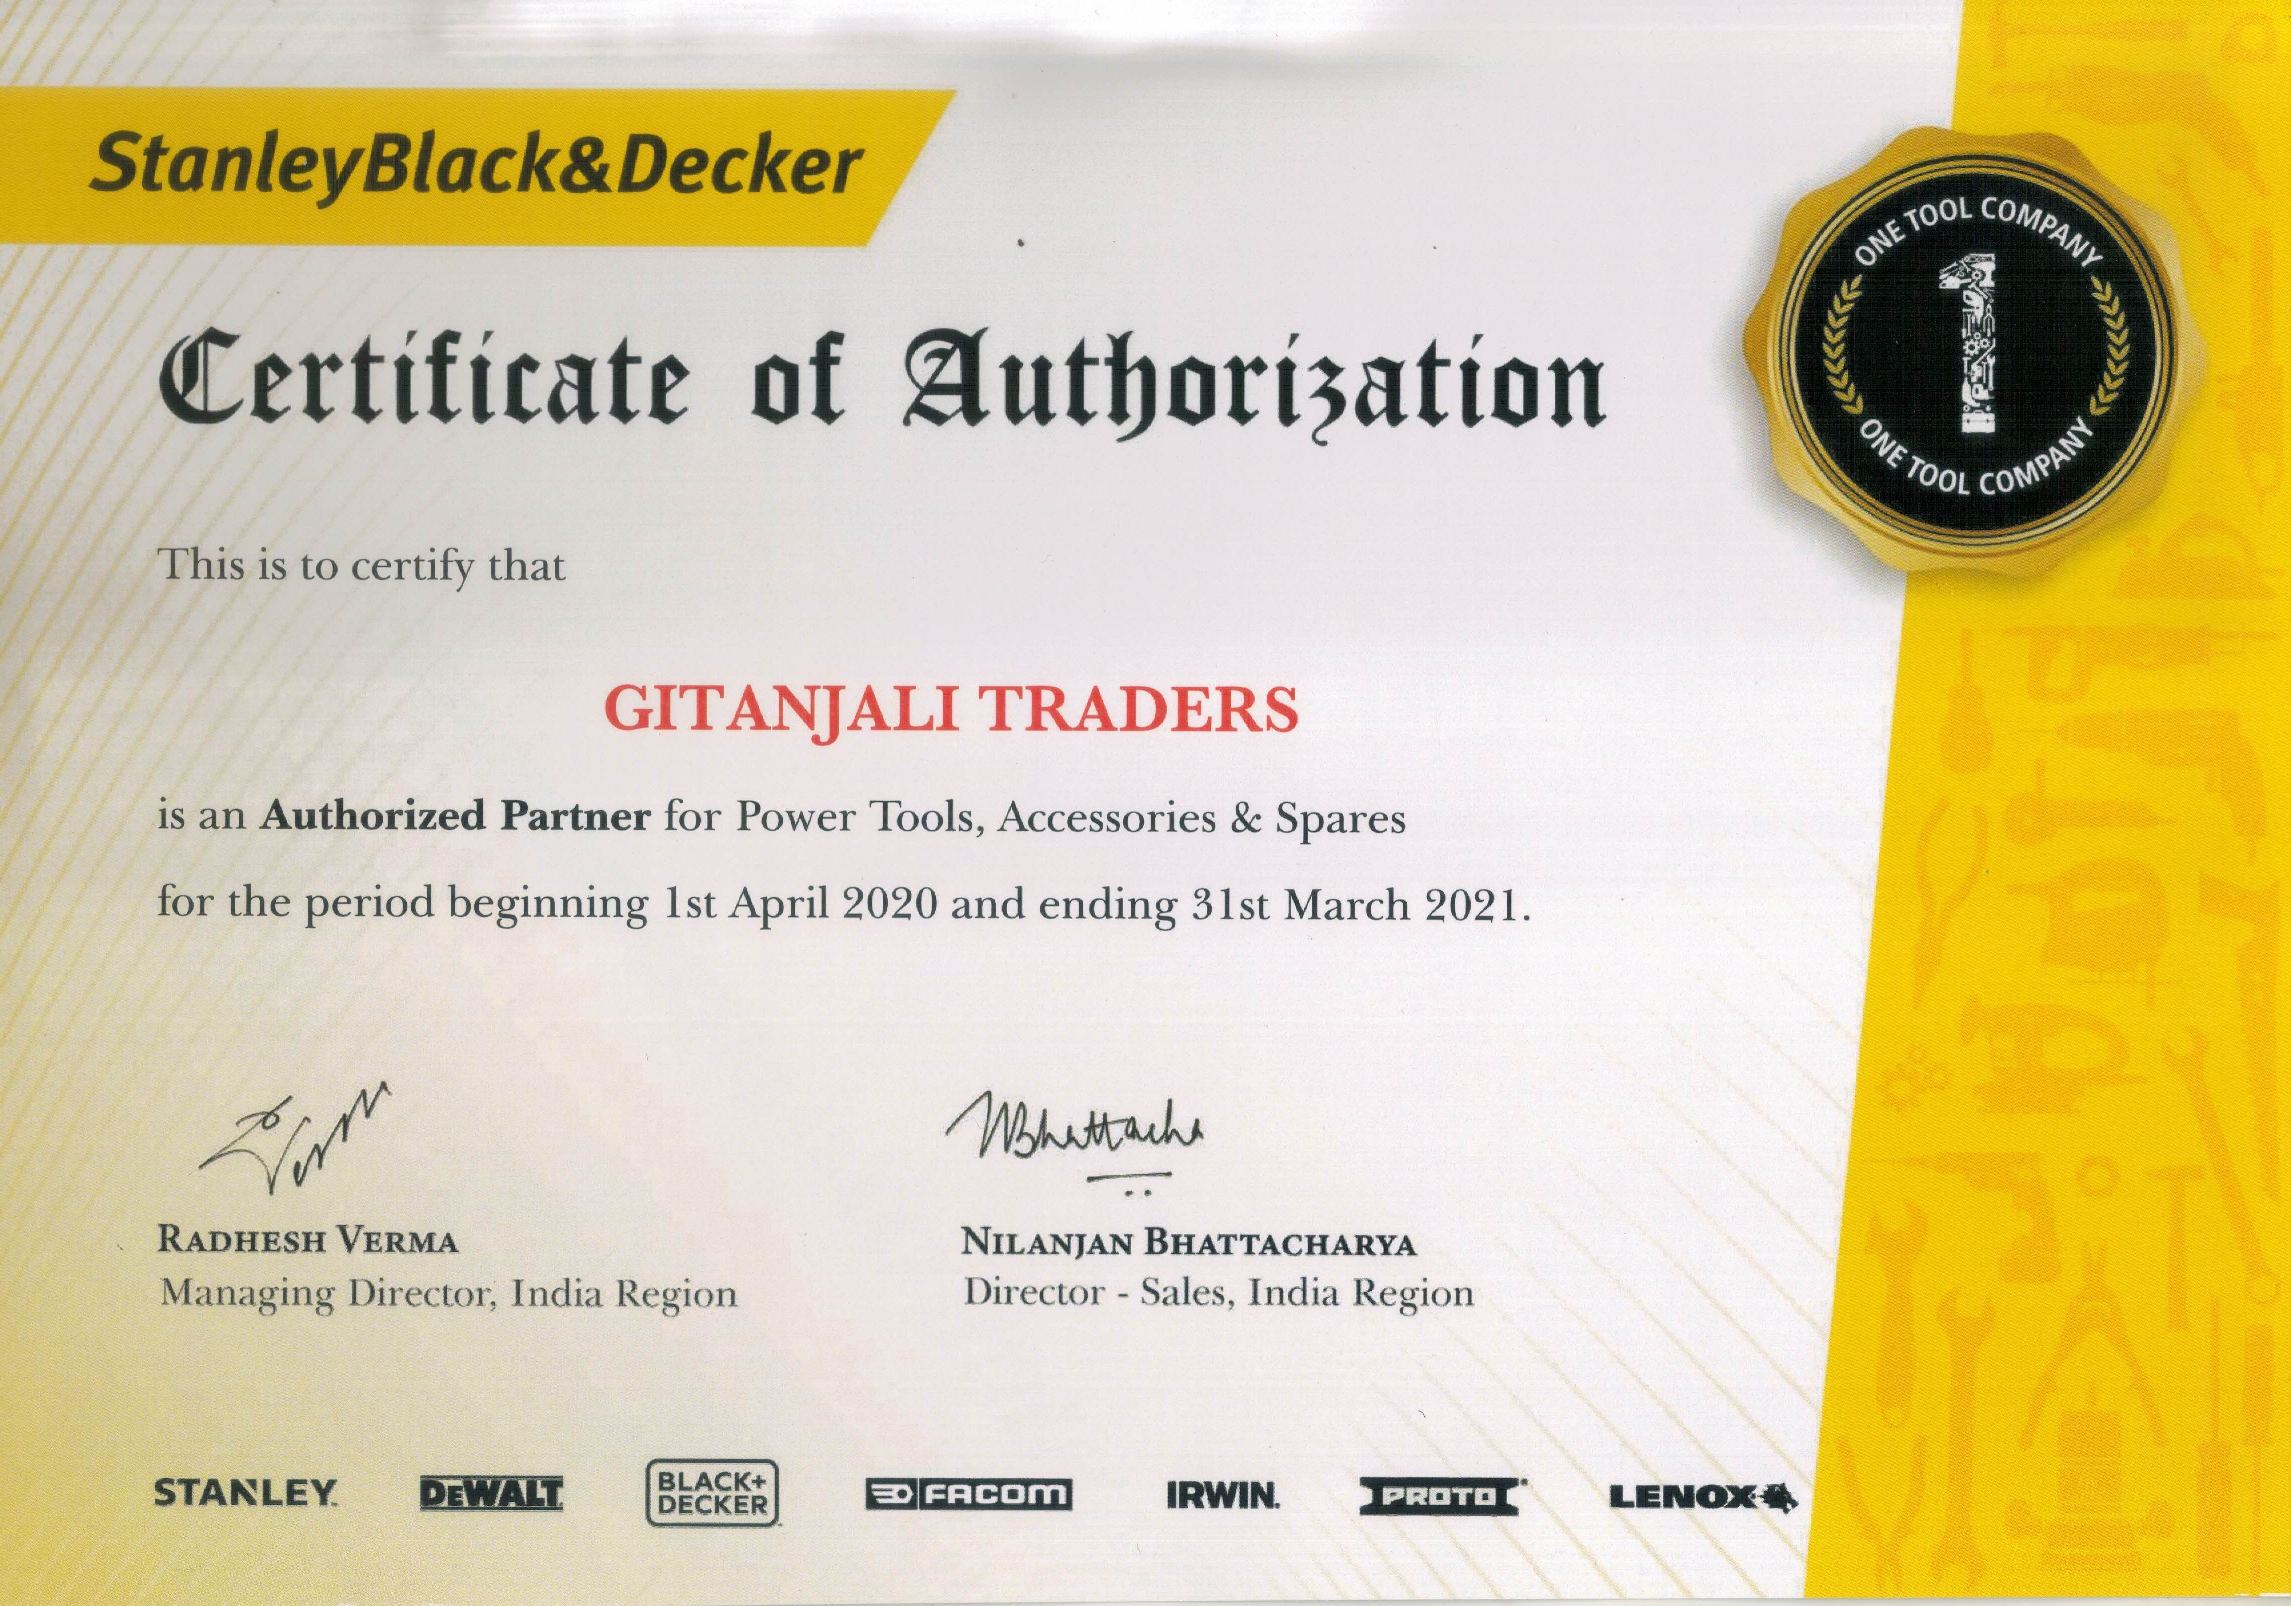 stanley black & decker of certificate